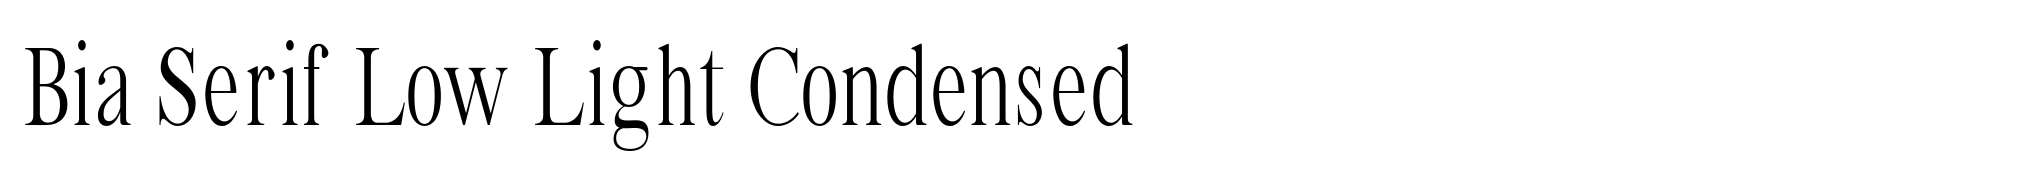 Bia Serif Low Light Condensed image